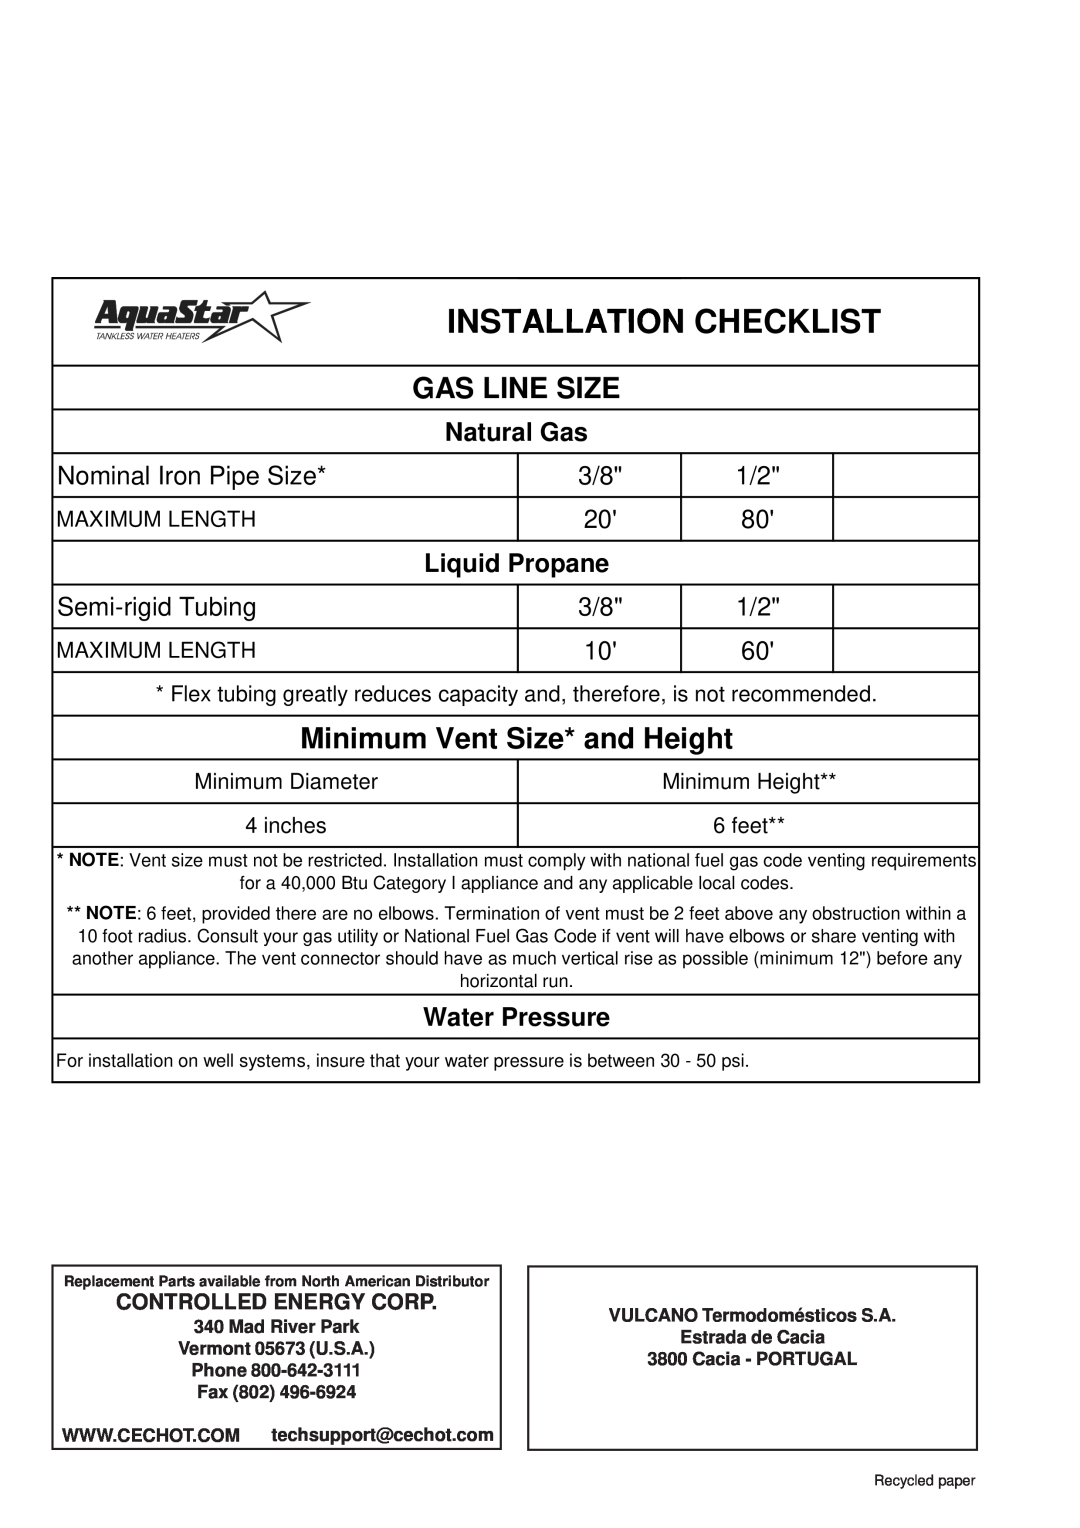 AquaStar 38B NG Water Pressure, Installation Checklist, Gas Line Size, Minimum Vent Size* and Height, Semi-rigid Tubing 